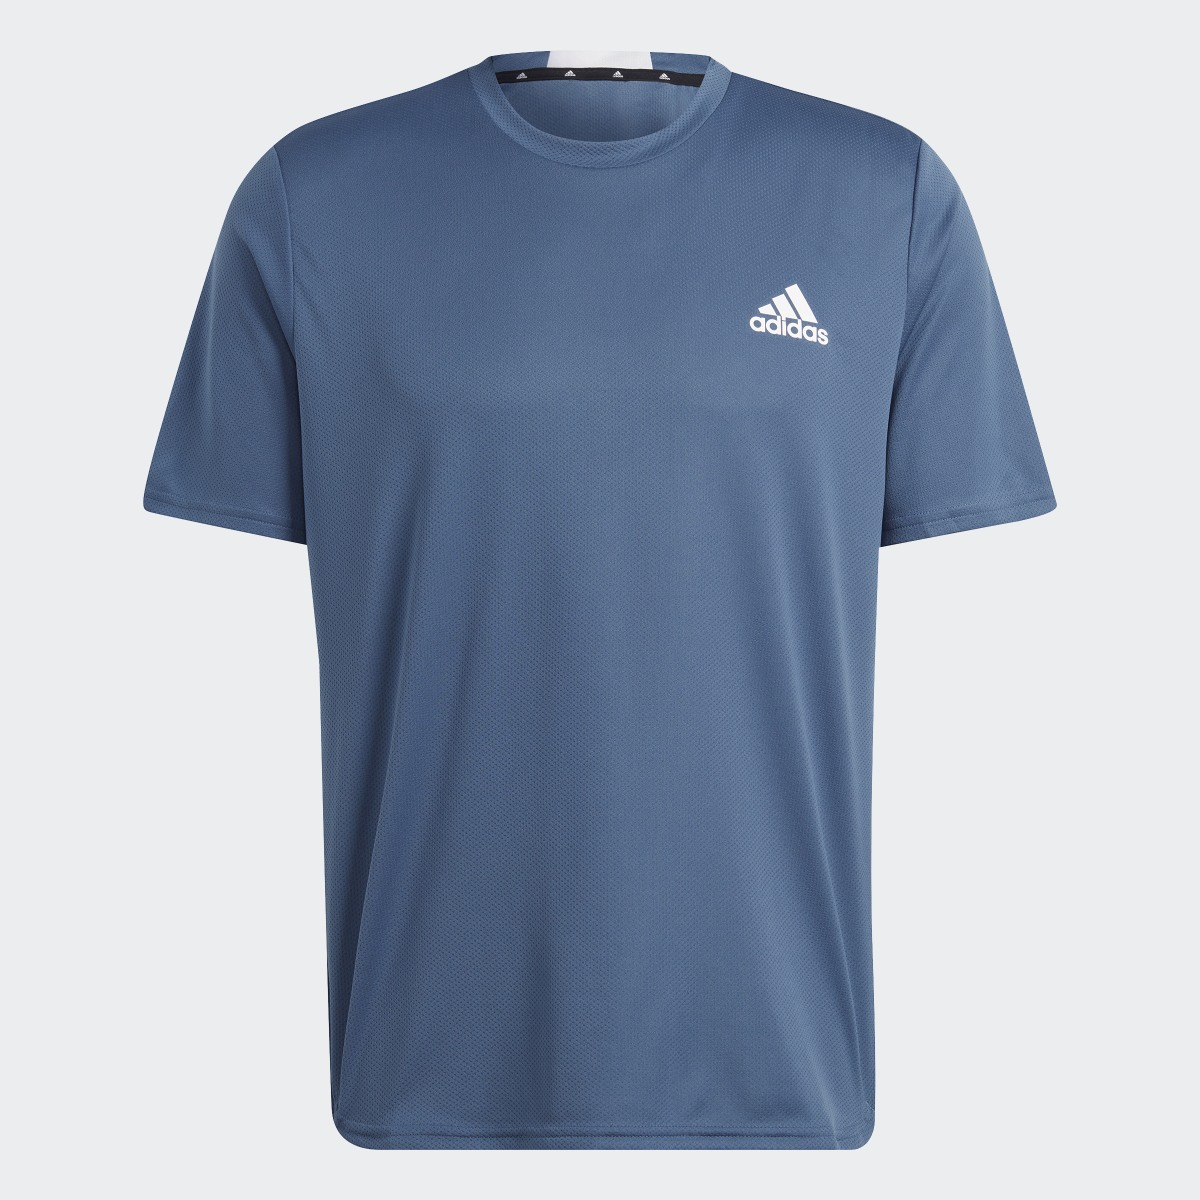 Adidas AEROREADY Designed for Movement T-Shirt. 5